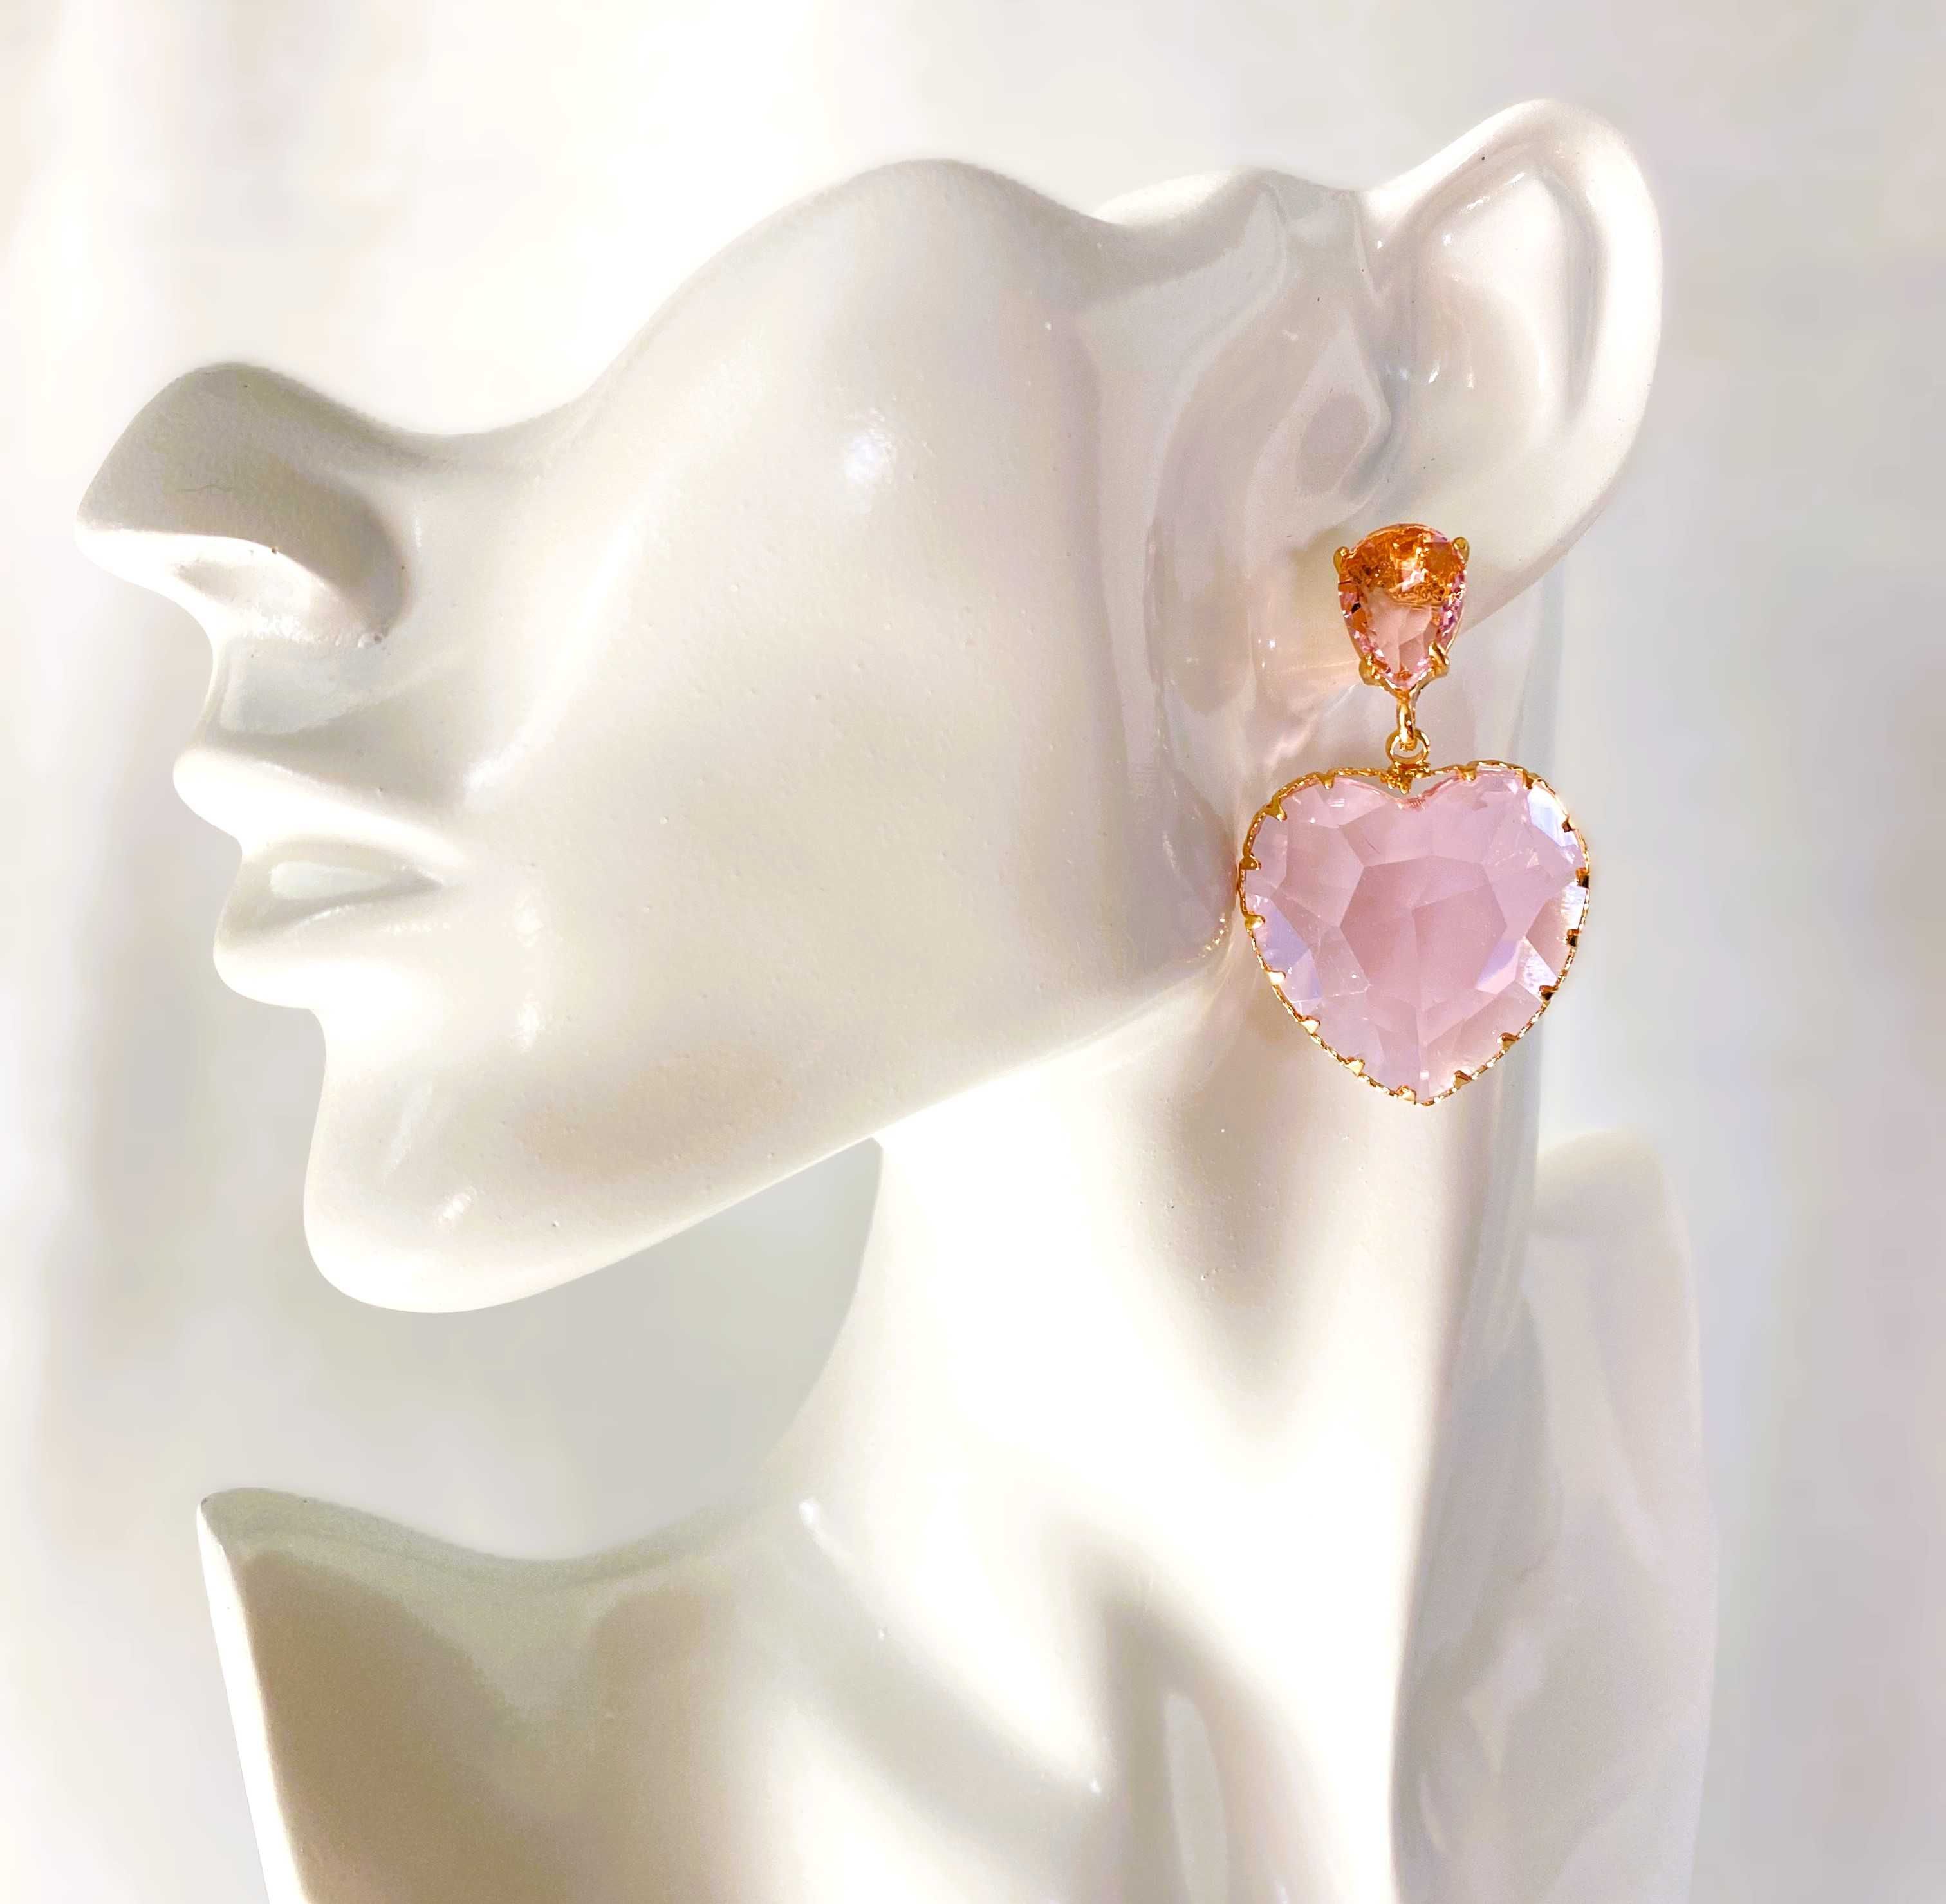 Cercei aurii Emily cu cristal roz in forma de inima.